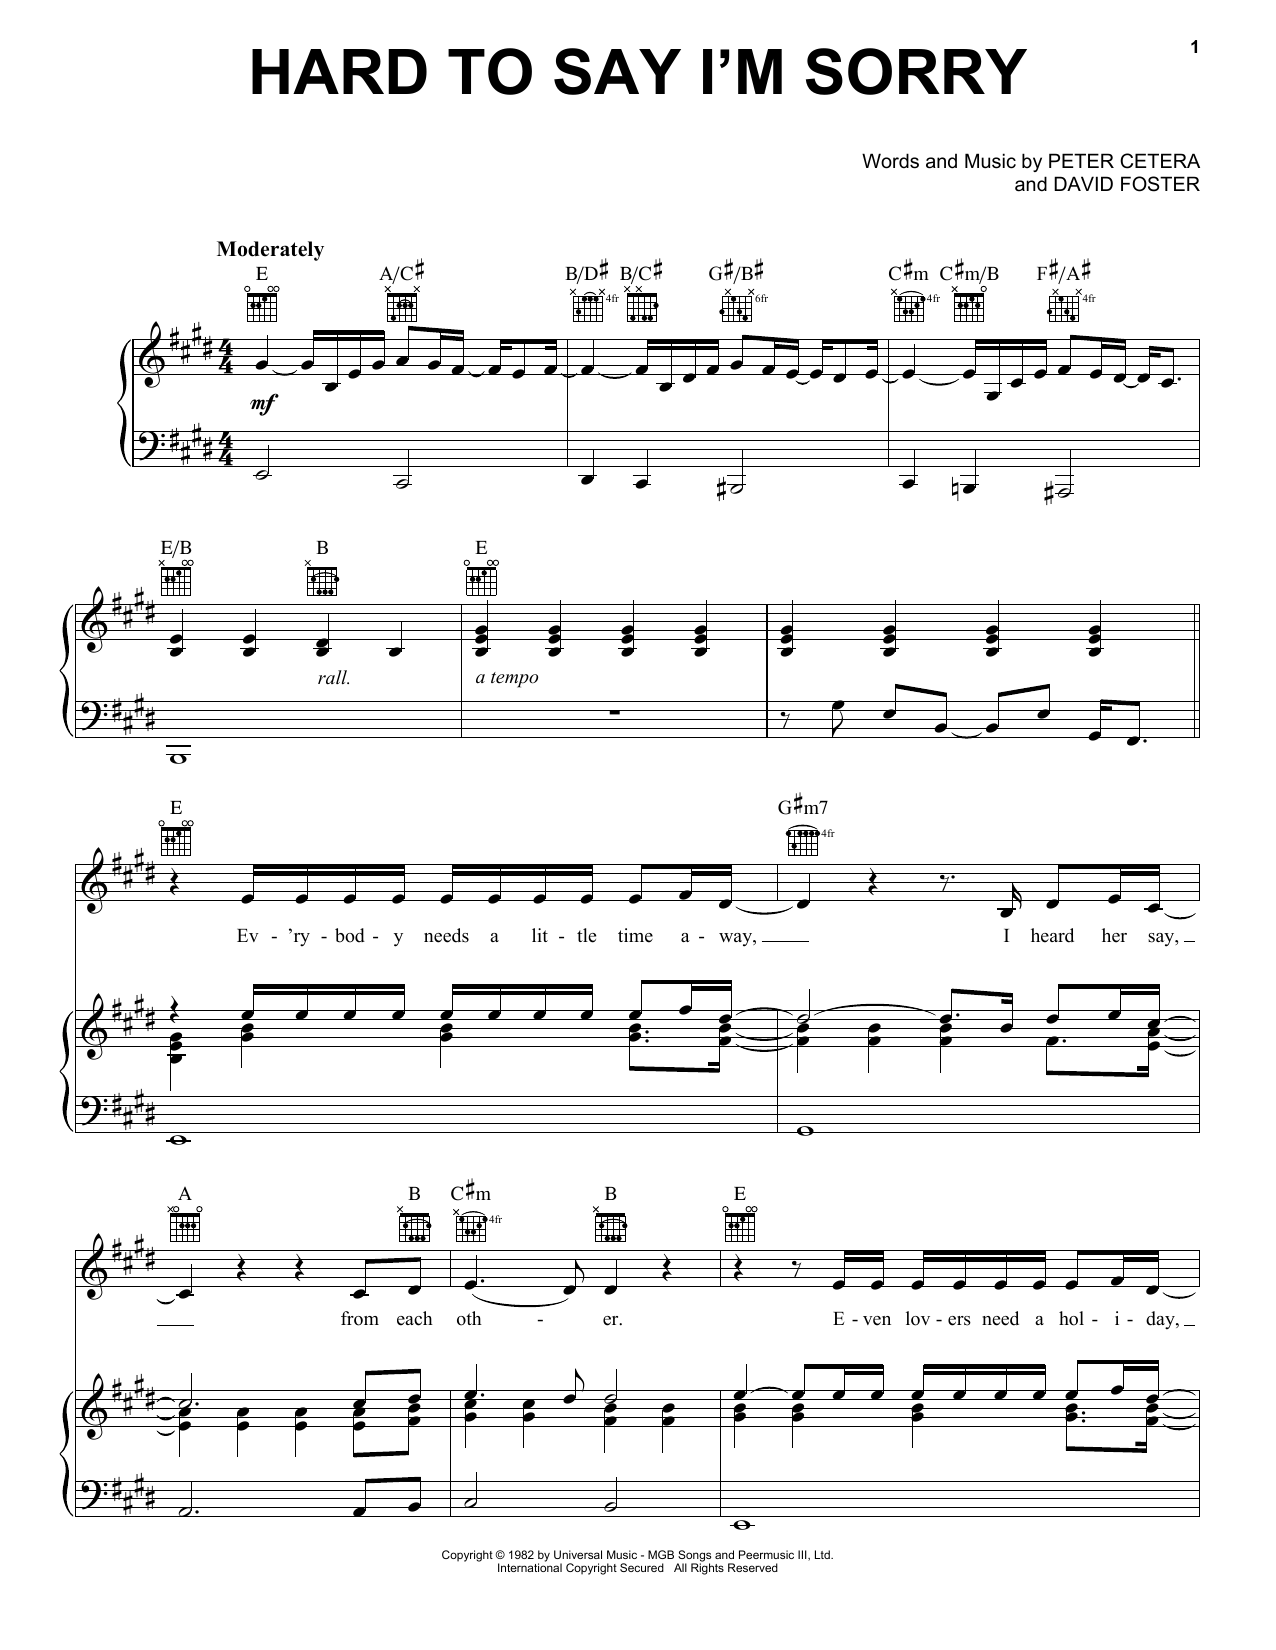 Chicago Hard To Say I'm Sorry sheet music notes printable PDF score